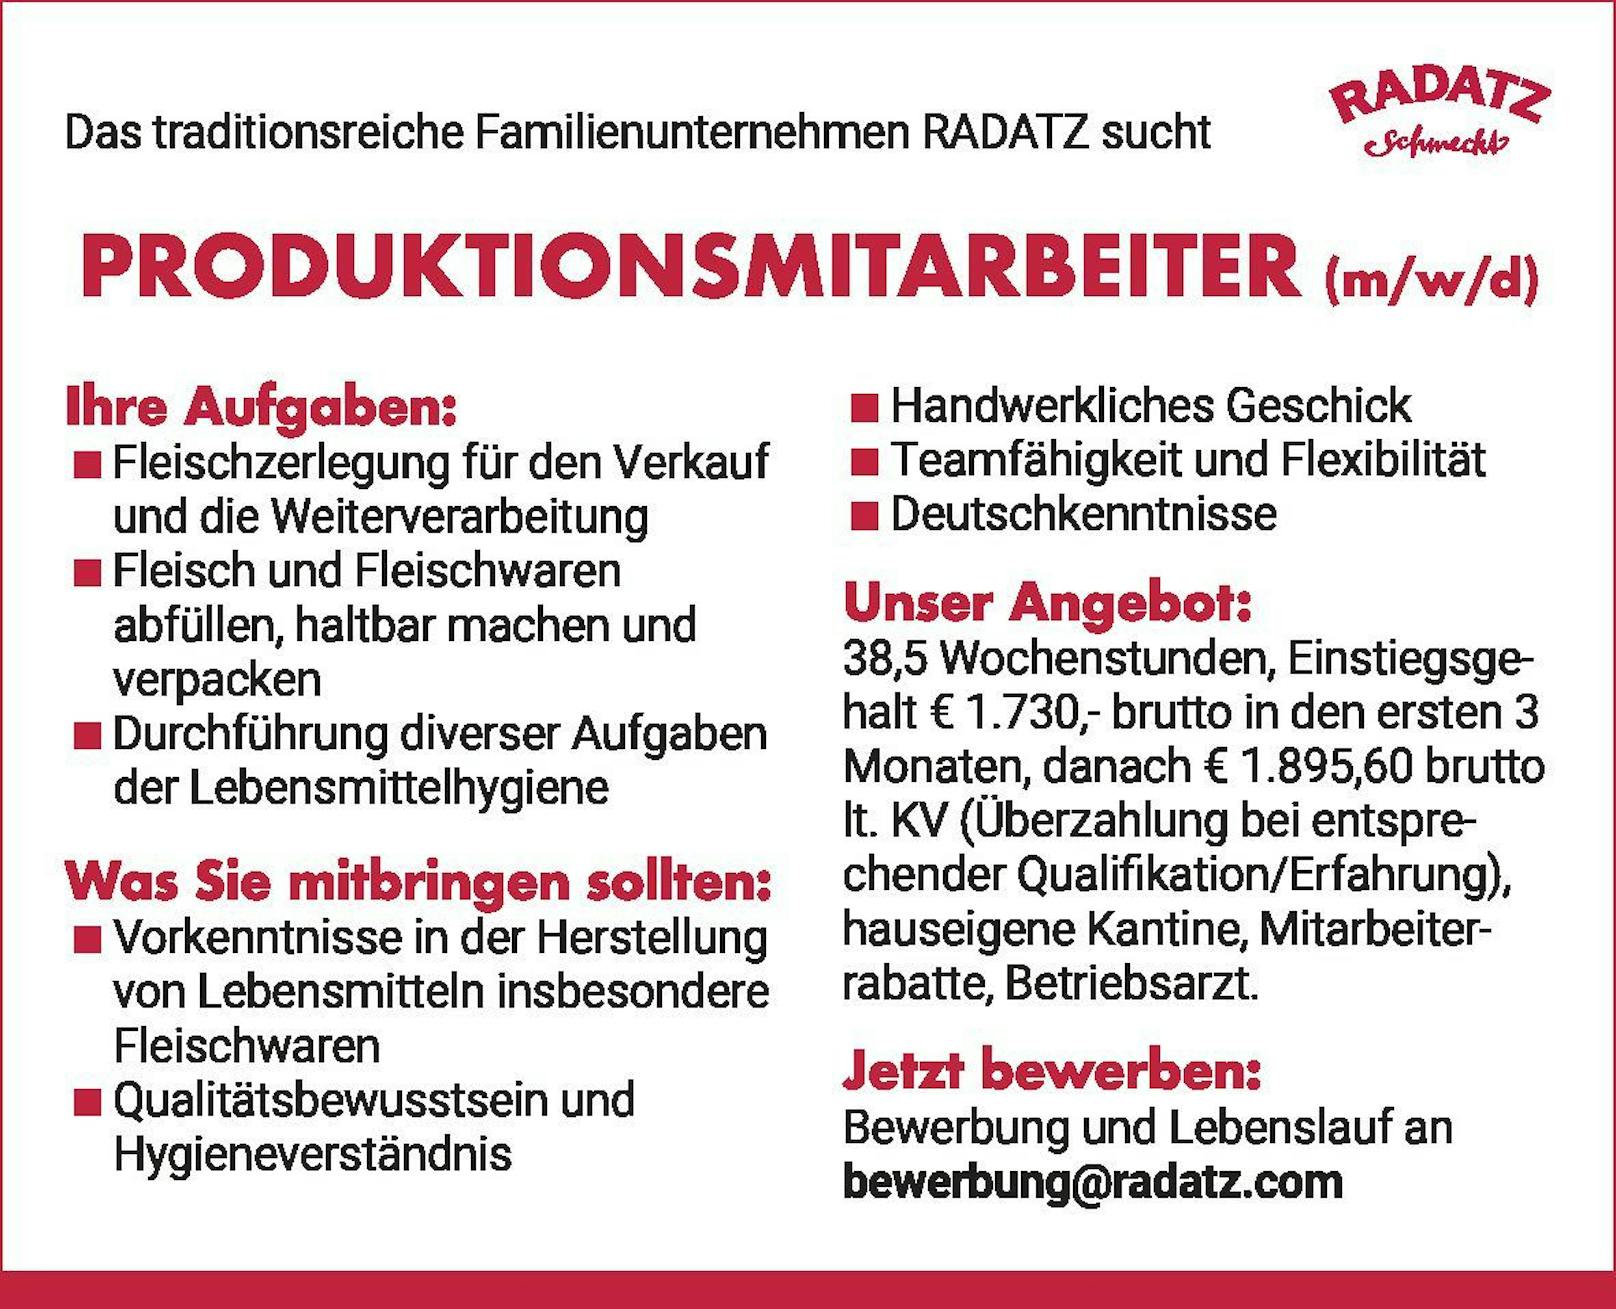 Firma: RADATZ / Job: Produktionsmitarbeiter (m/w/d)